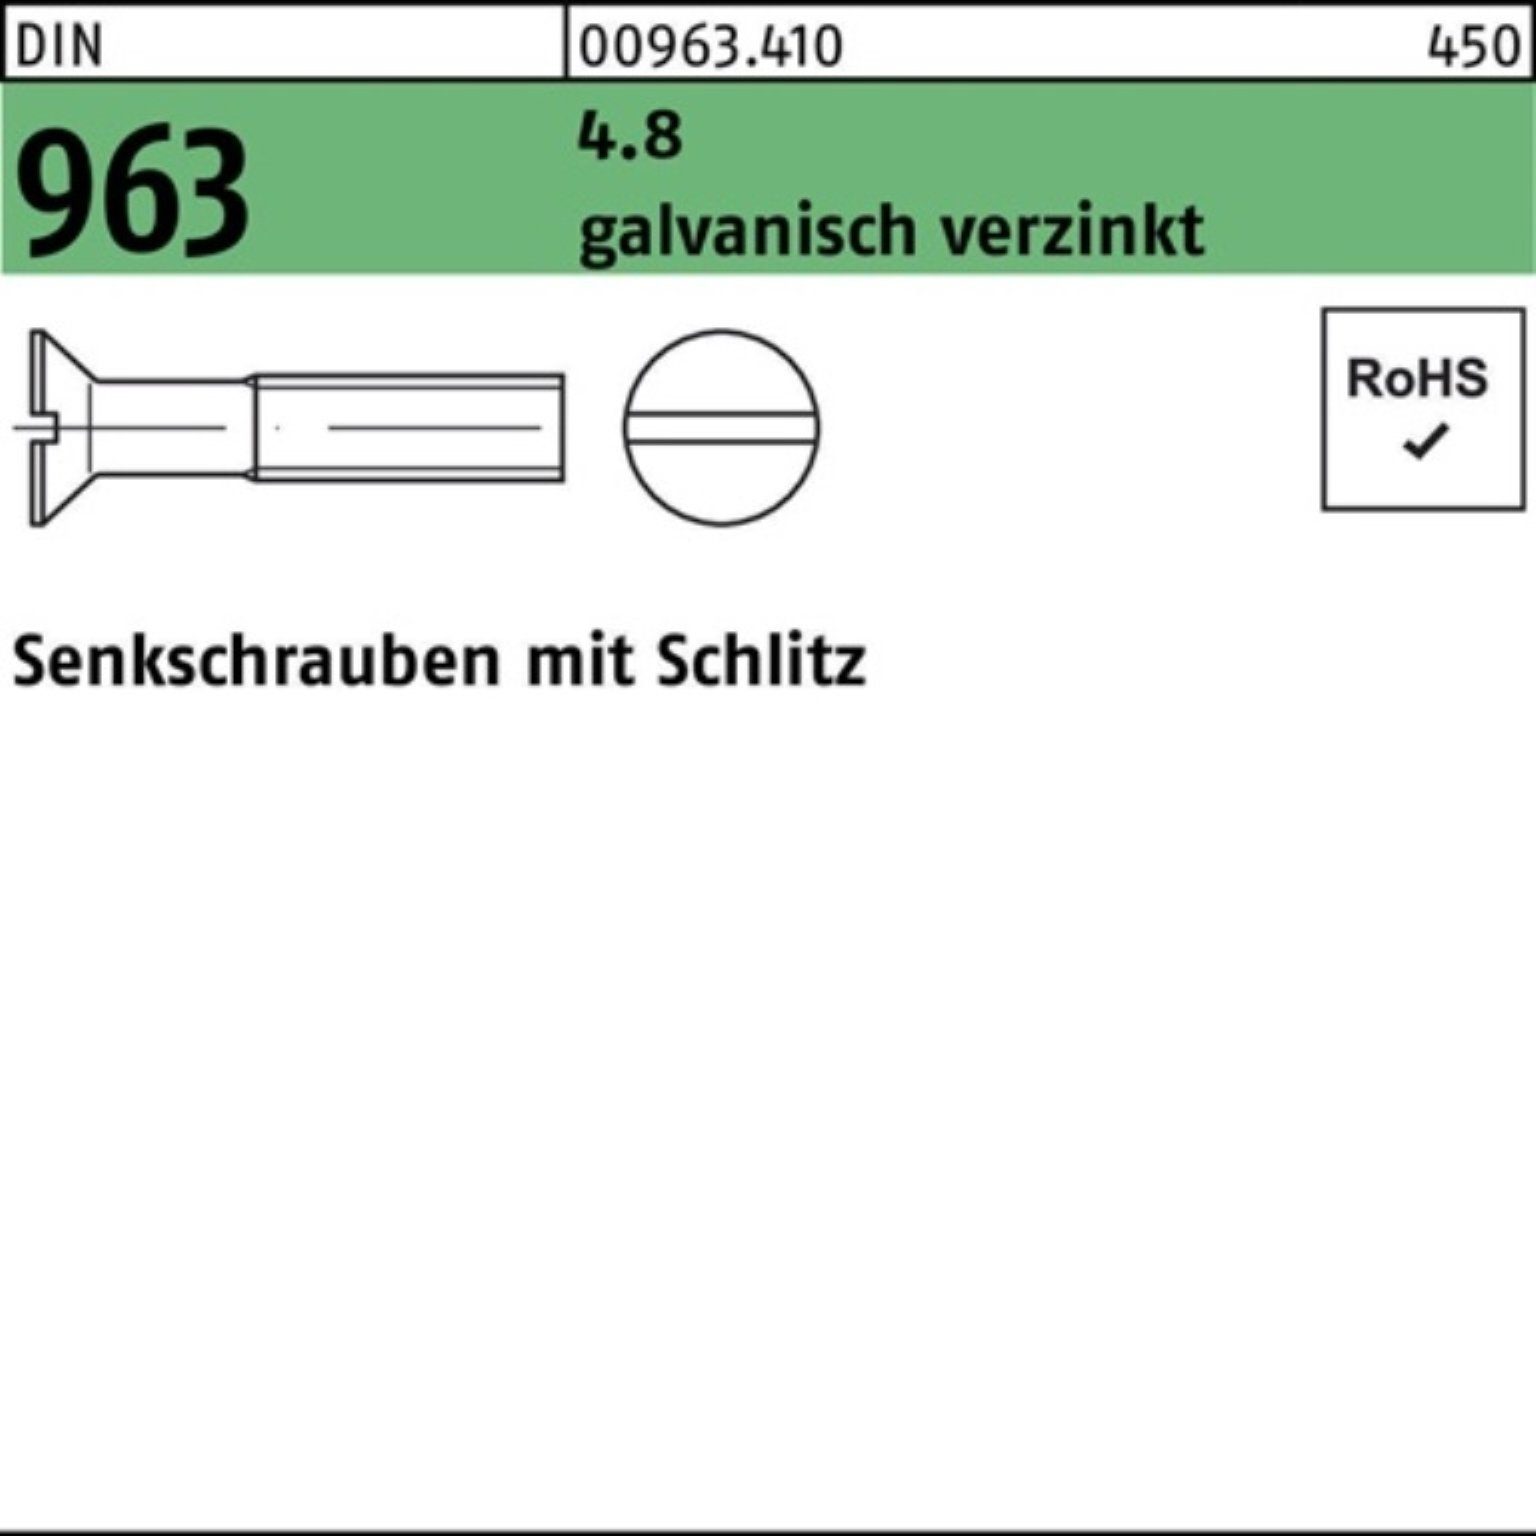 963 Schlitz Reyher DIN 200 200er M4x 4.8 galv.verz. 35 Pack Stü Senkschraube Senkschraube